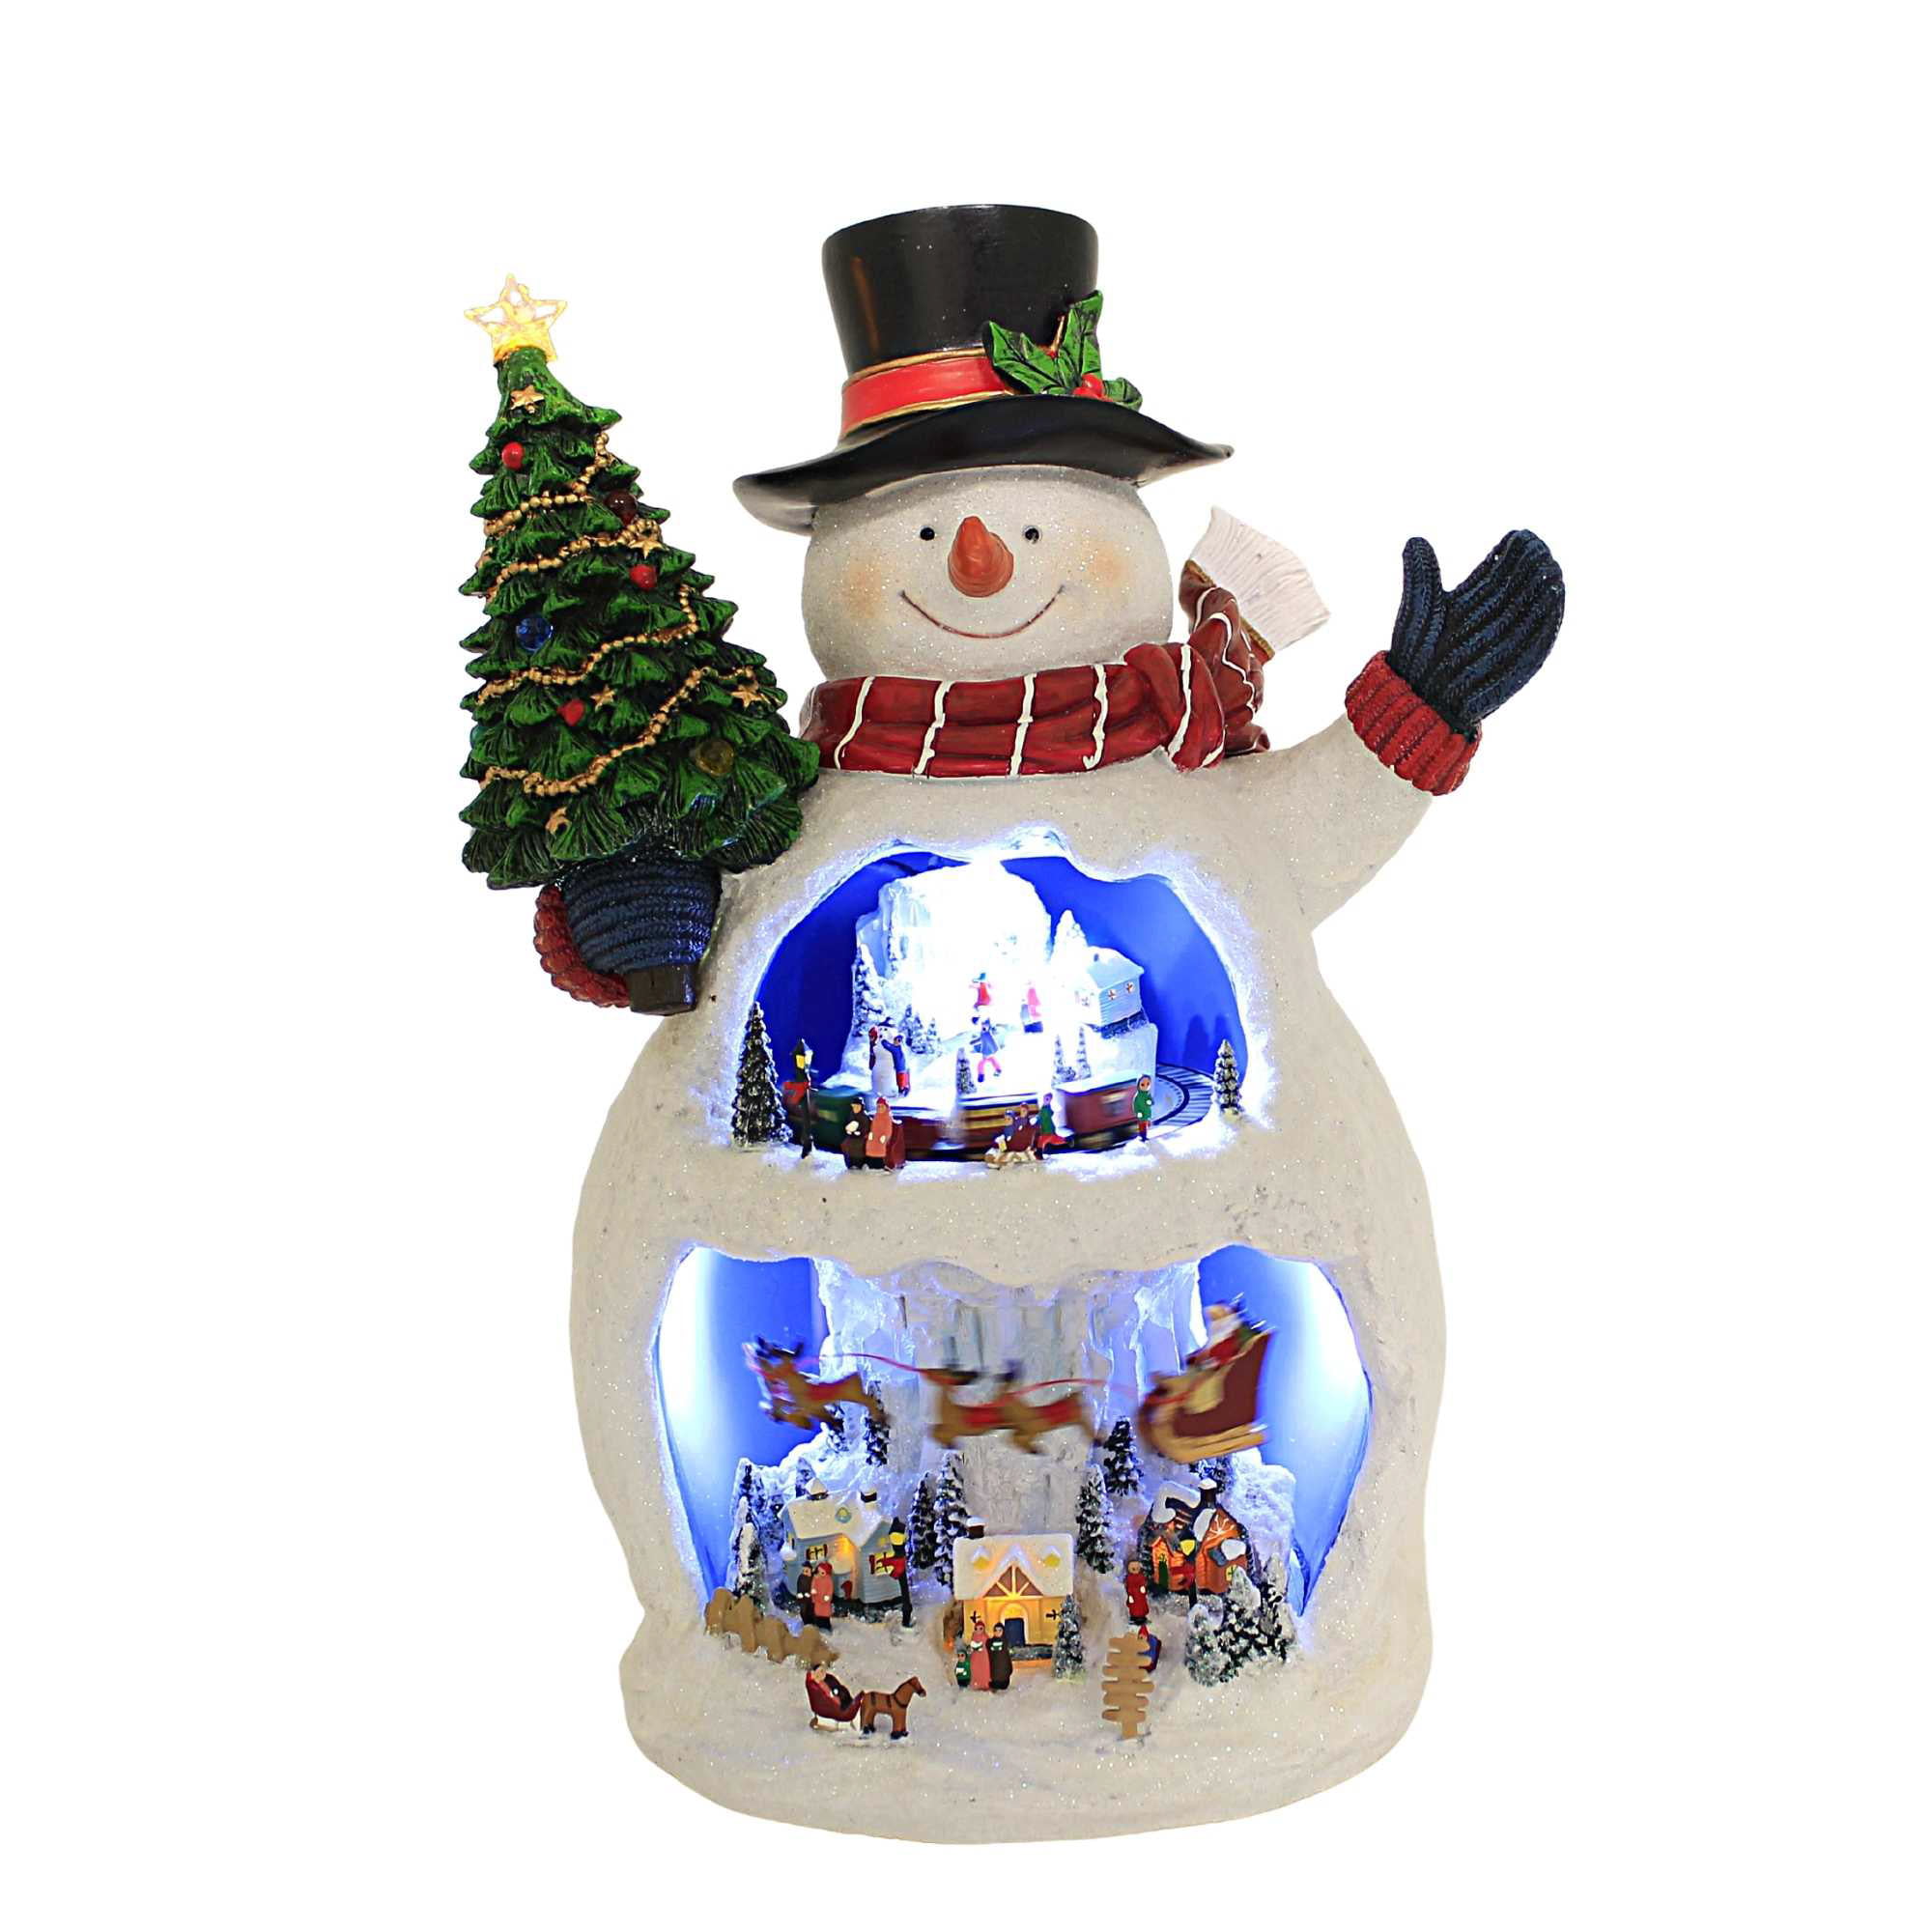 Roman, Inc. 3 Neon LED Ice Cube Snowman Assortment - 132429